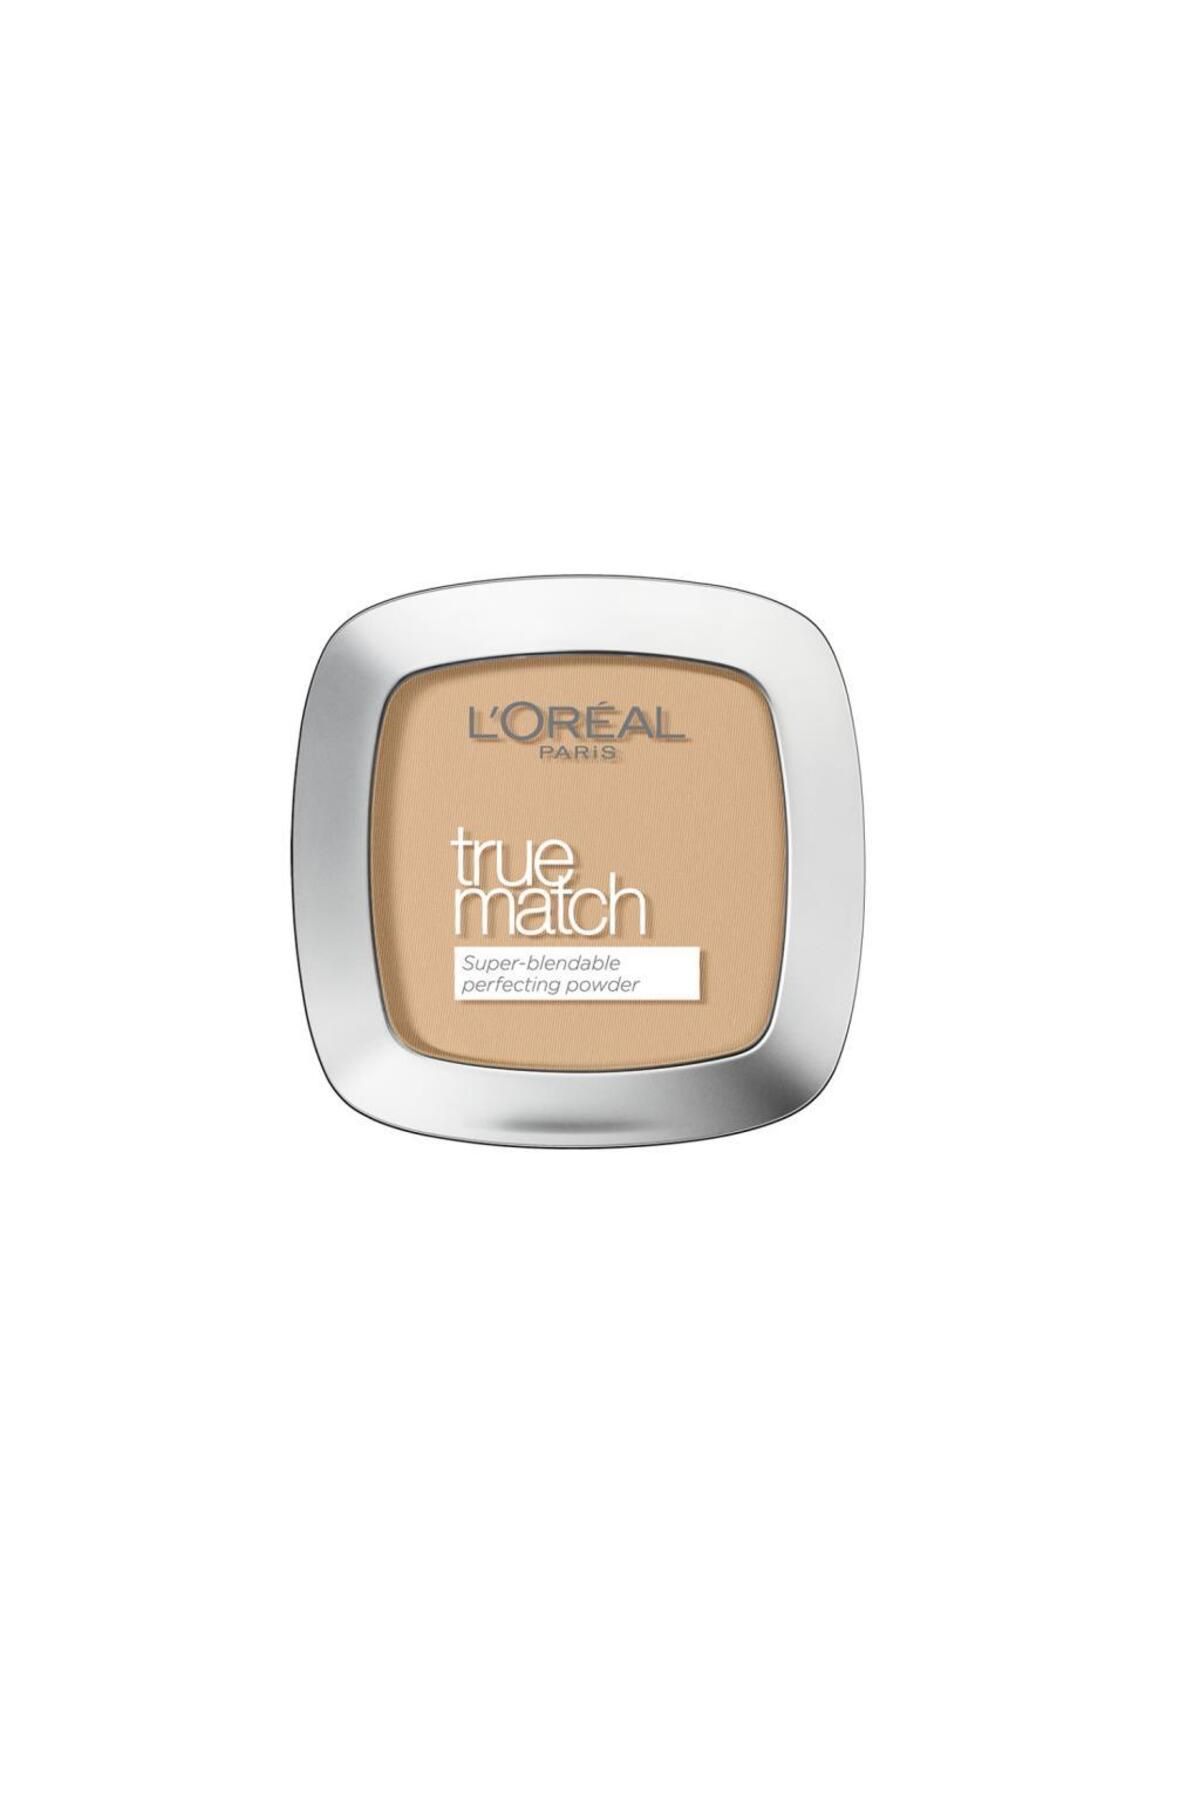 L'Oreal Paris Pudra - True Match Powder 3.R/3.C Rose Beige 3600520772028